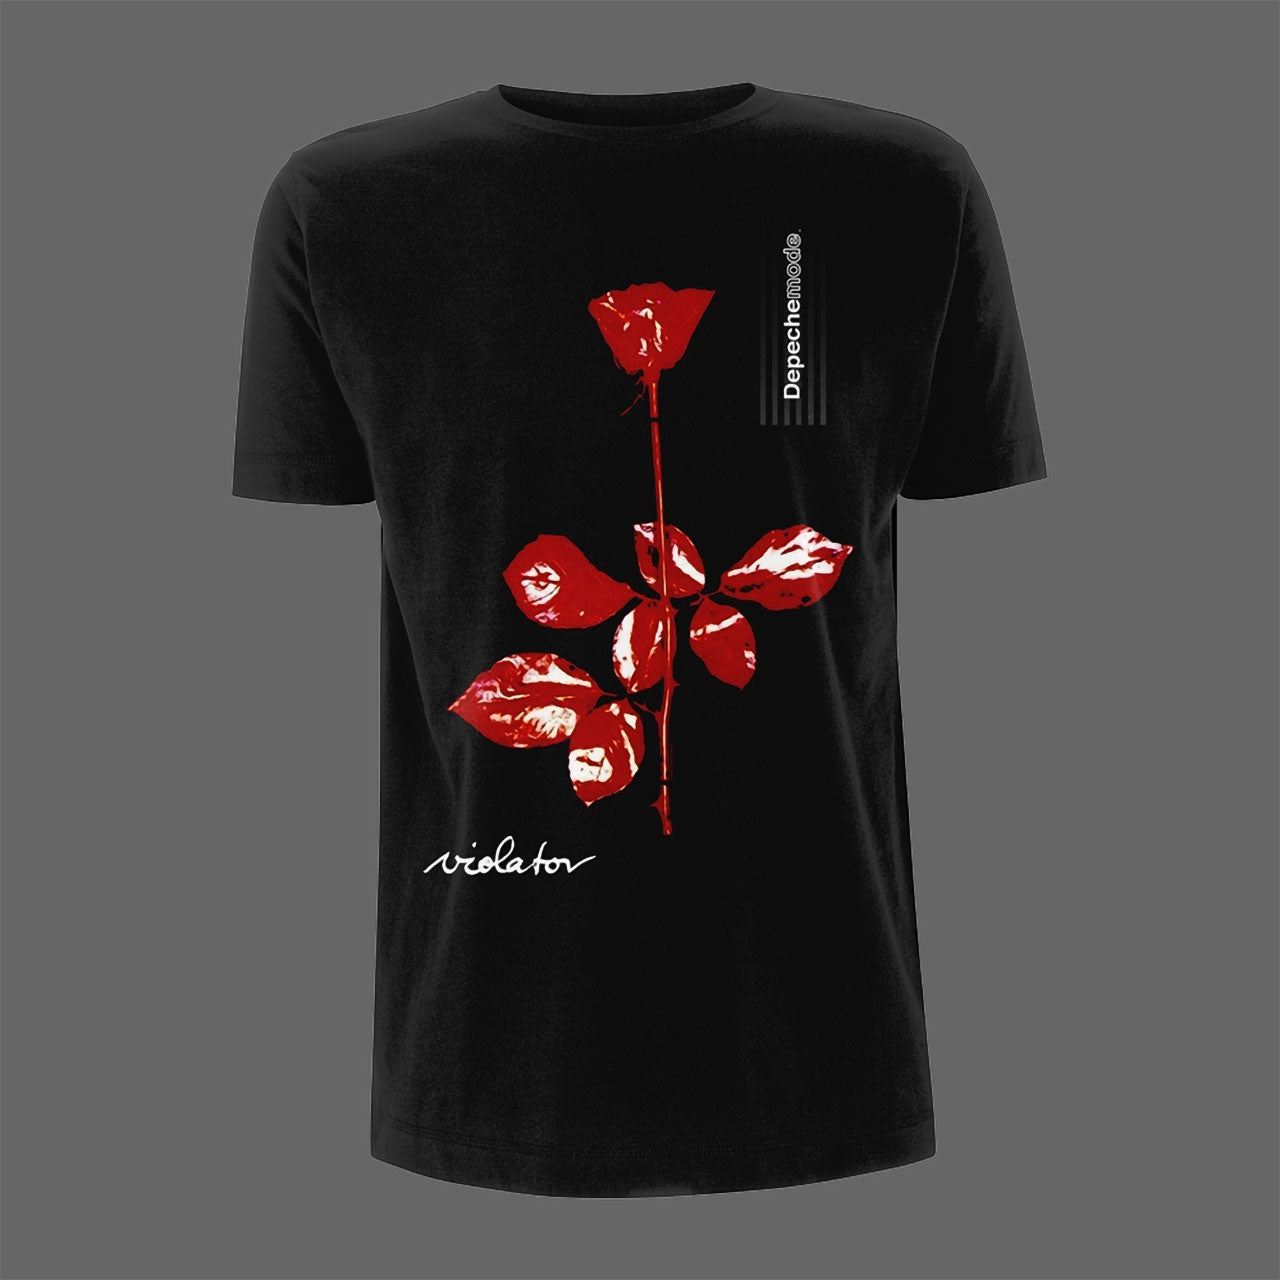 Depeche Mode - Violator (T-Shirt)